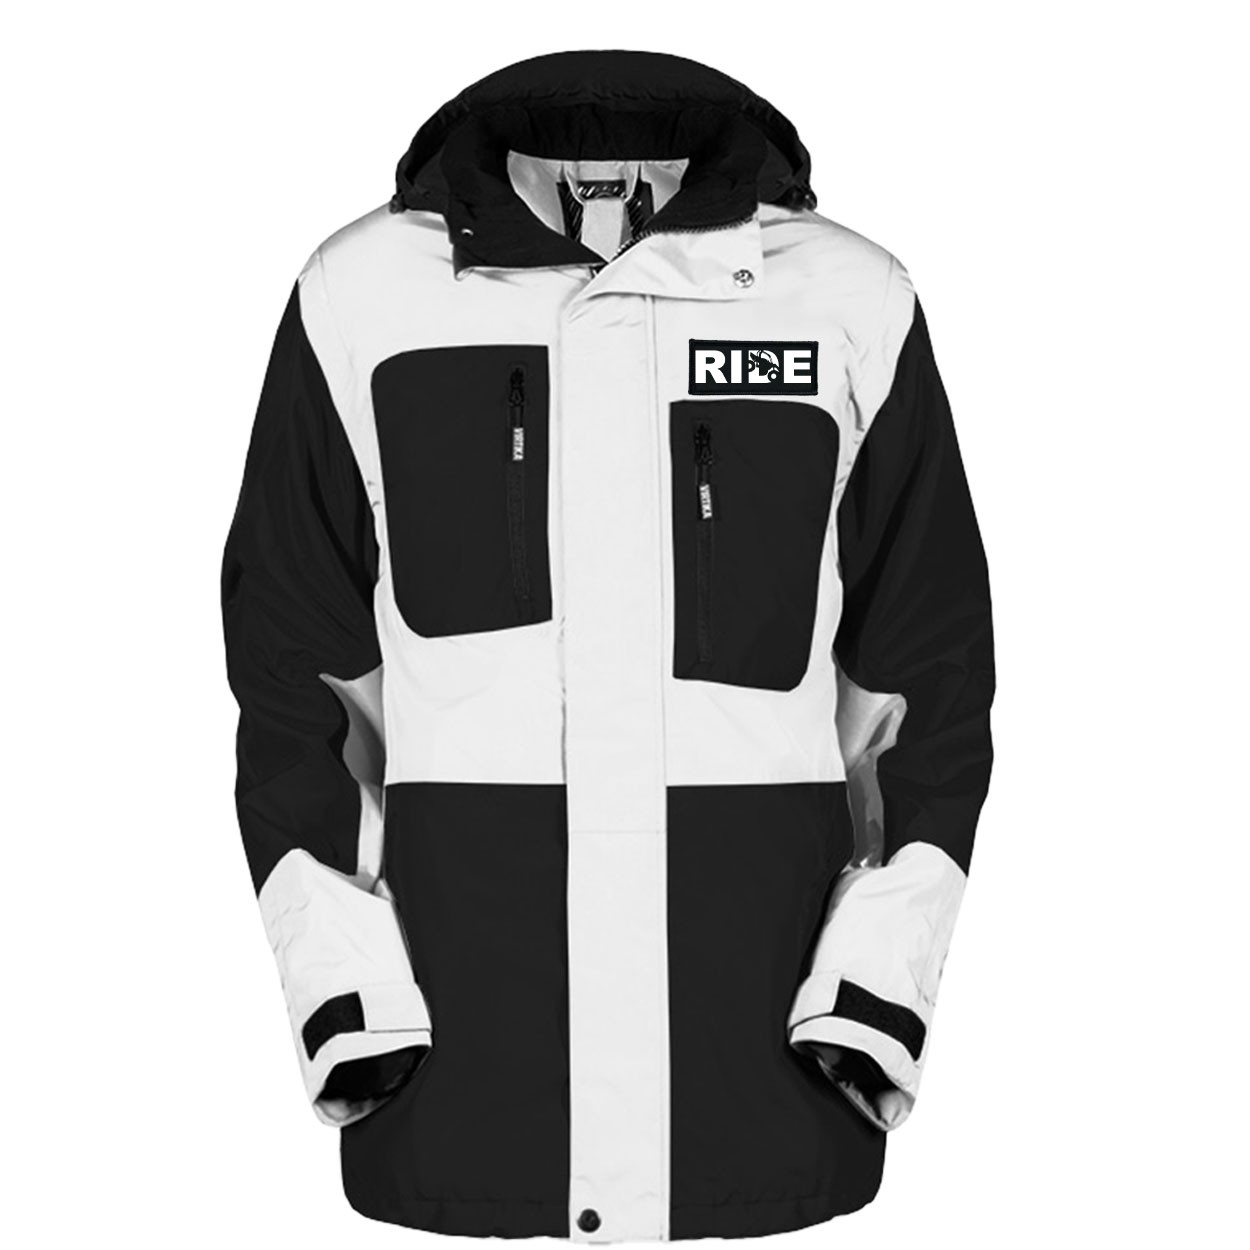 Ride UTV Logo Pro Waterproof Breathable Winter Virtika Jacket Black/White (White Logo)